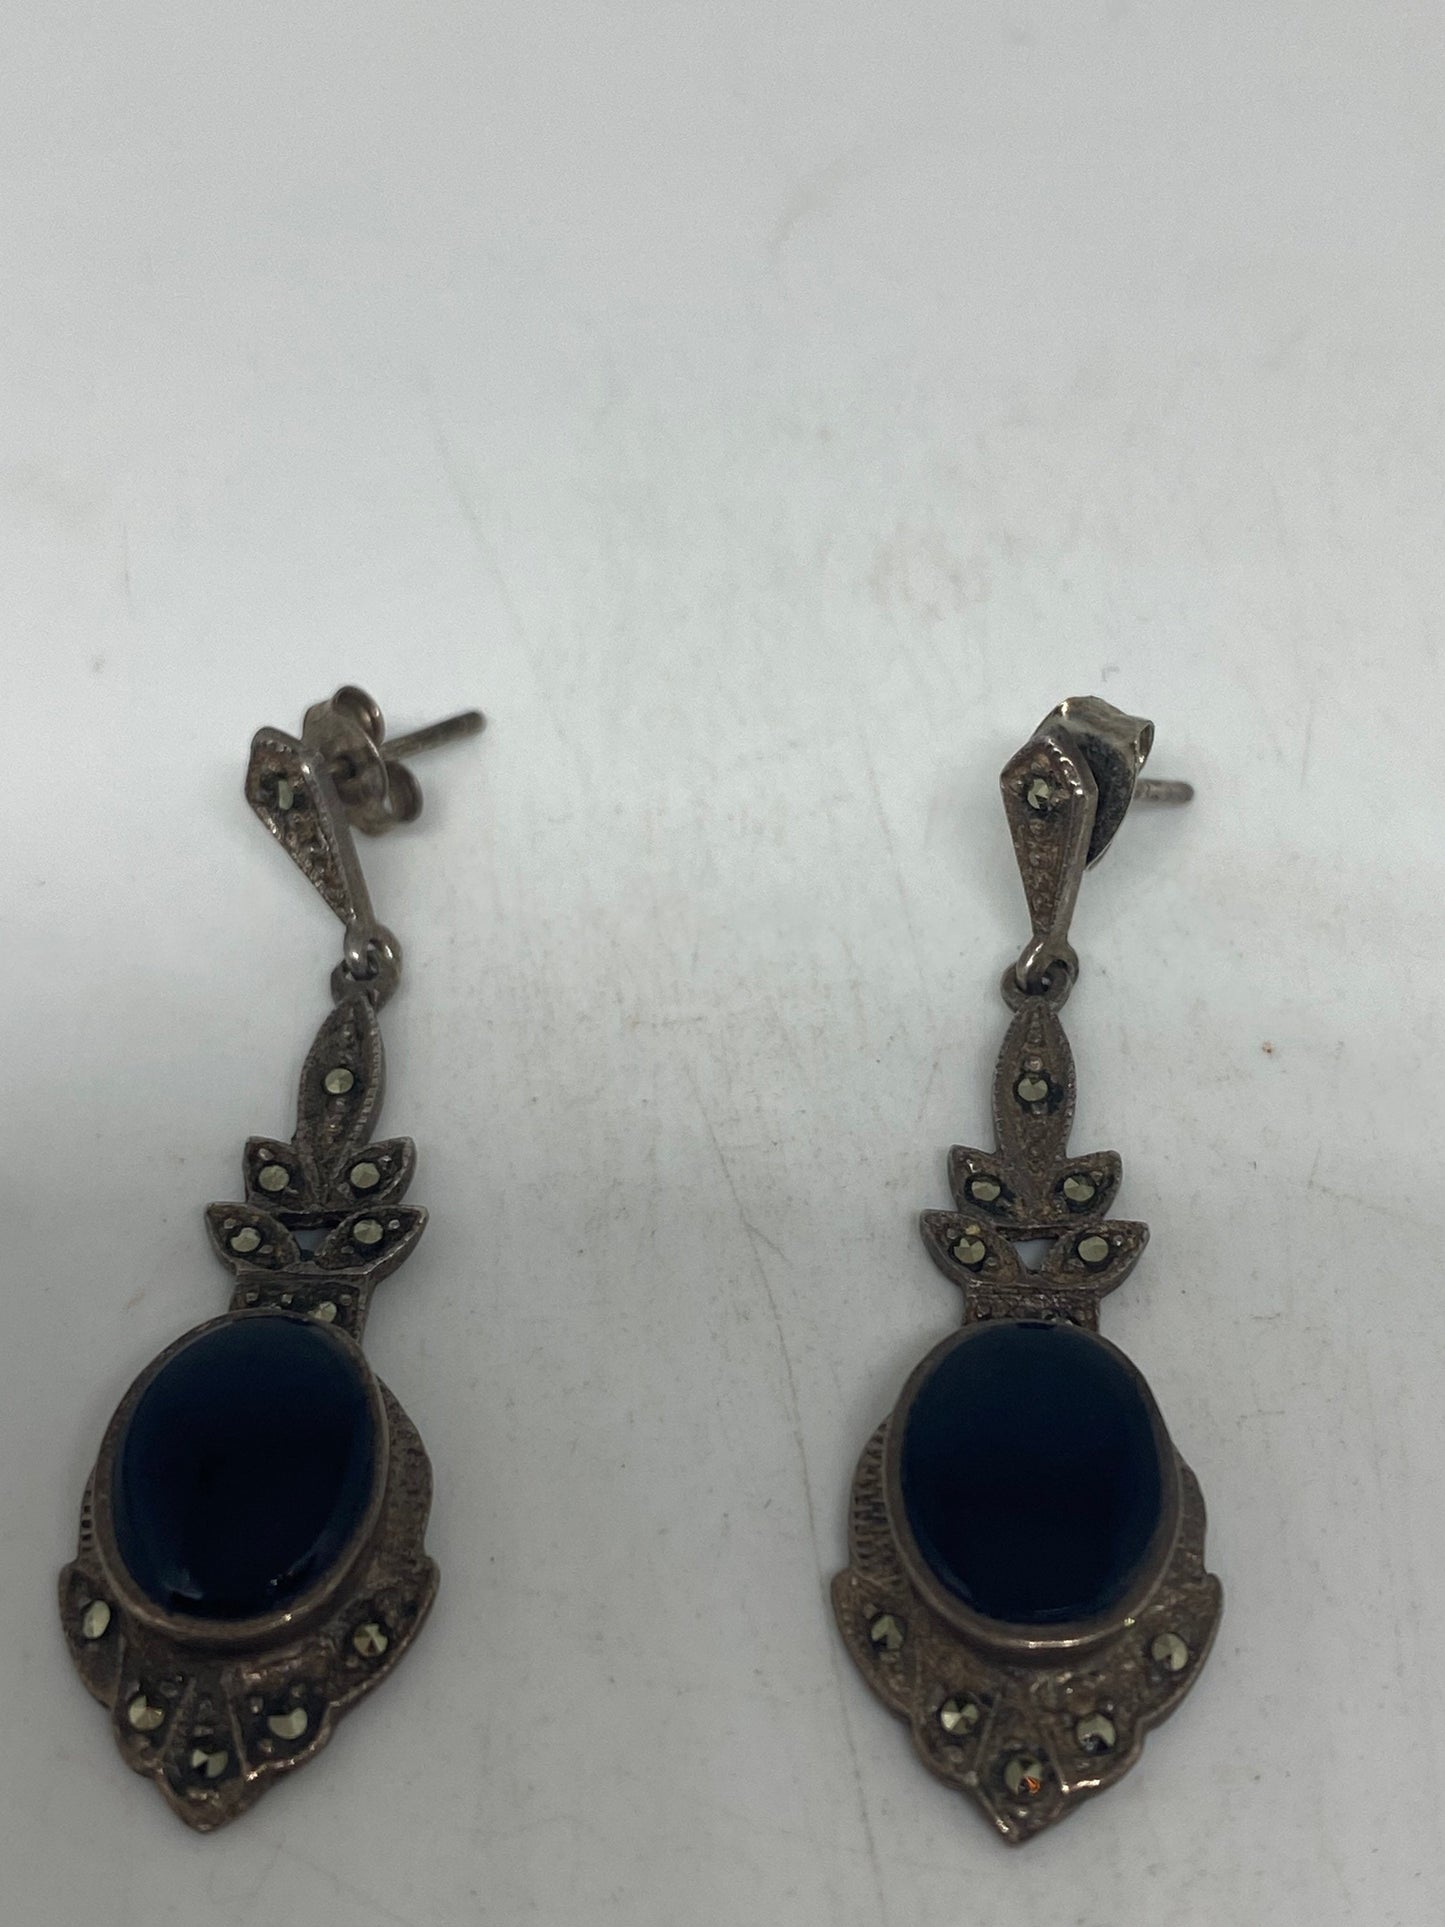 Vintage Black Onyx Earrings Marcasite 925 Sterling Silver Deco Dangle Chandelier